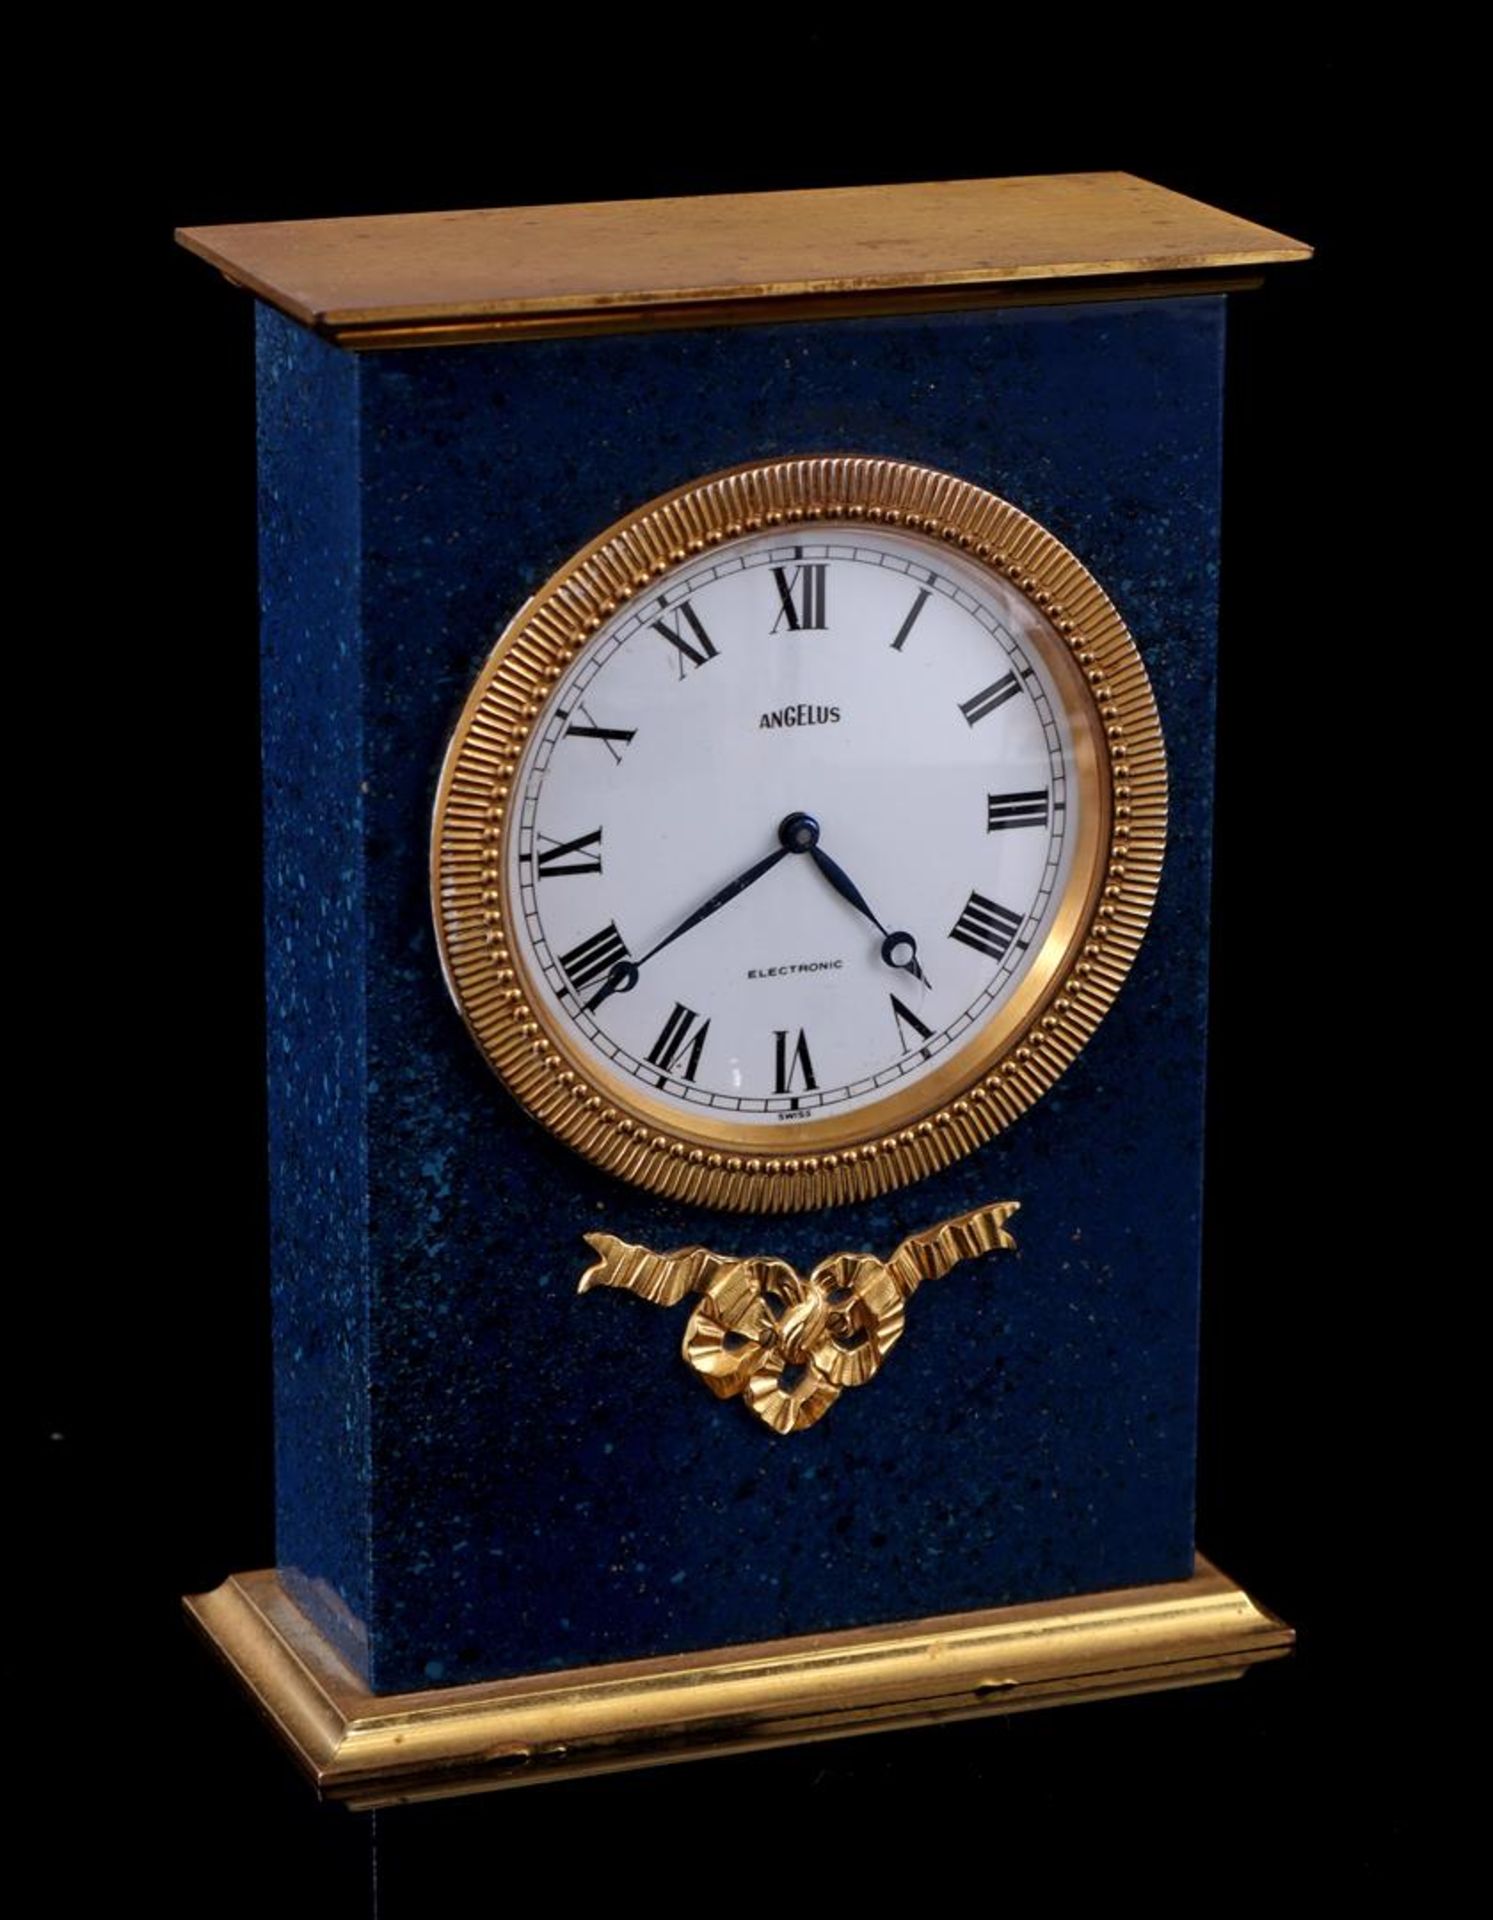 Angelus Electronic Swiss table clock